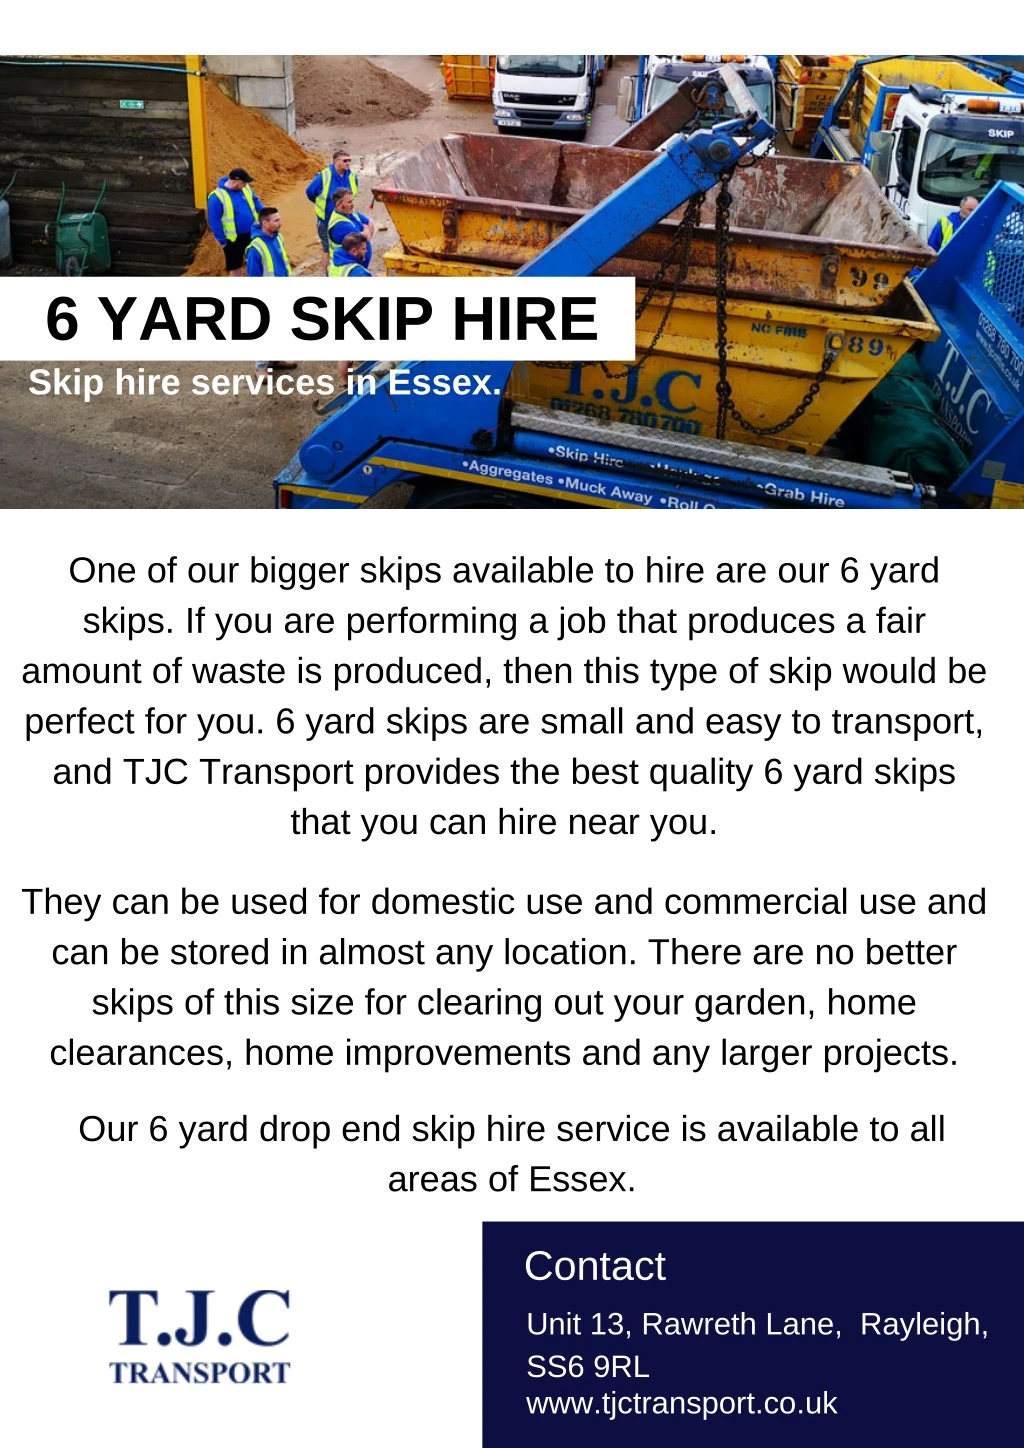 6 yard skip hire skip hire services in essex